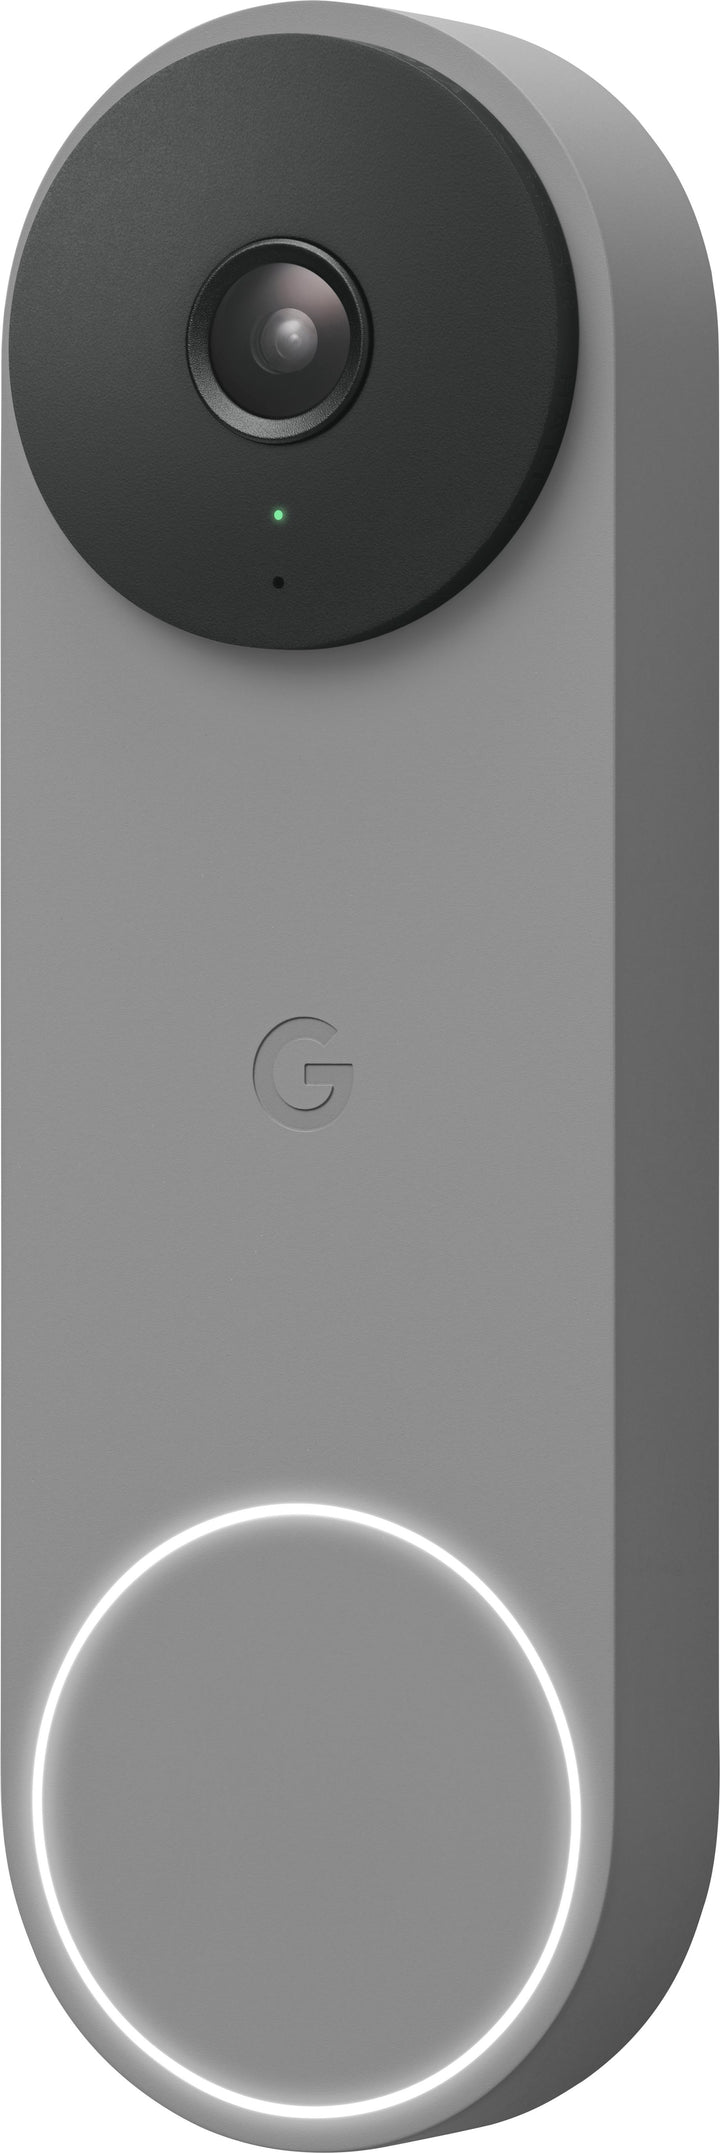 Google - Nest Doorbell Wired (2nd Generation) - Ash_9